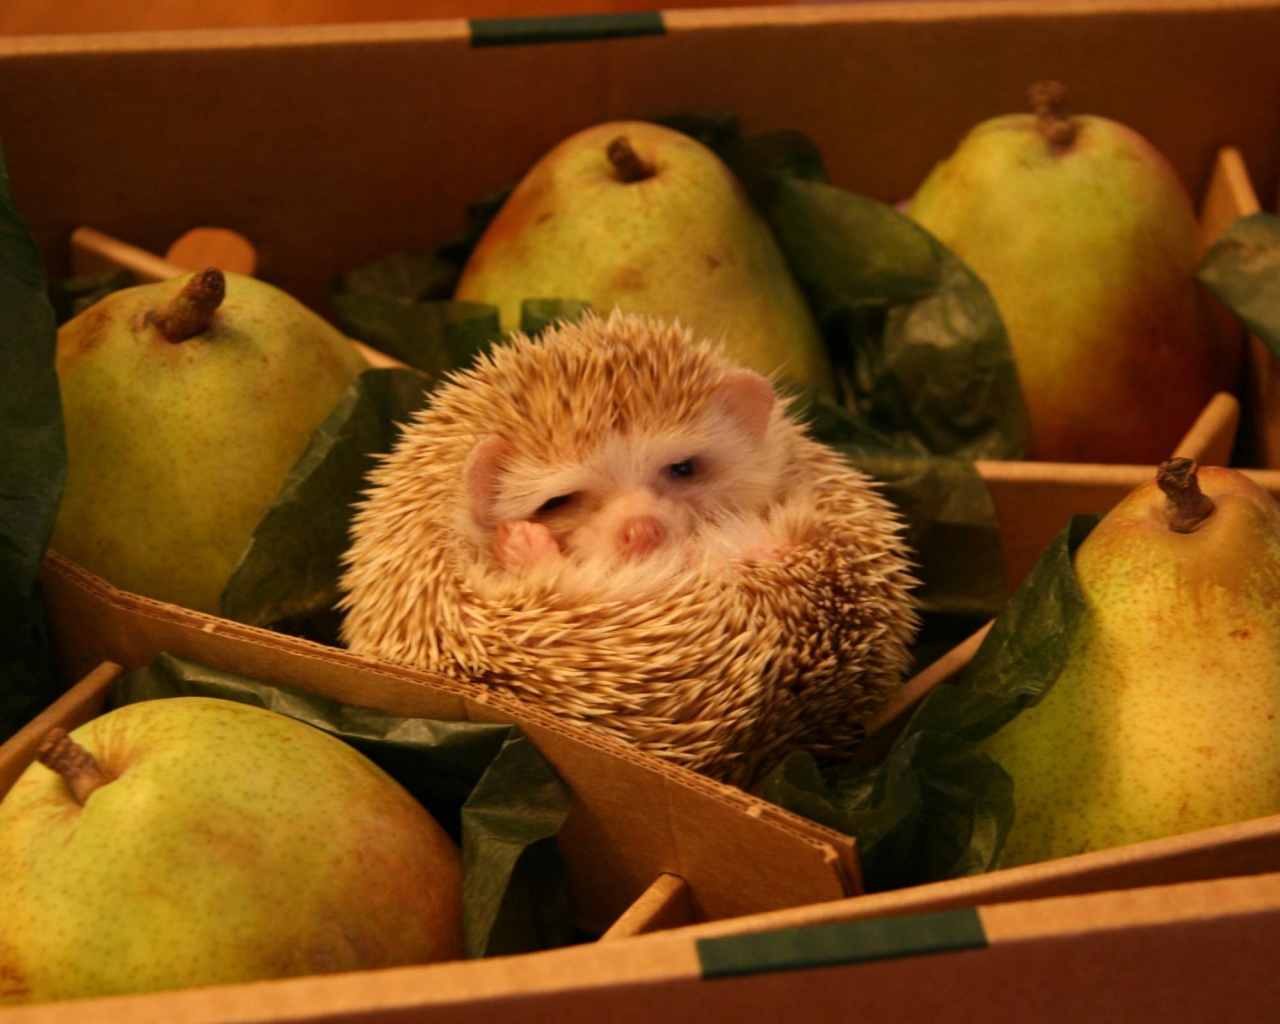 Hedgehog And Pears